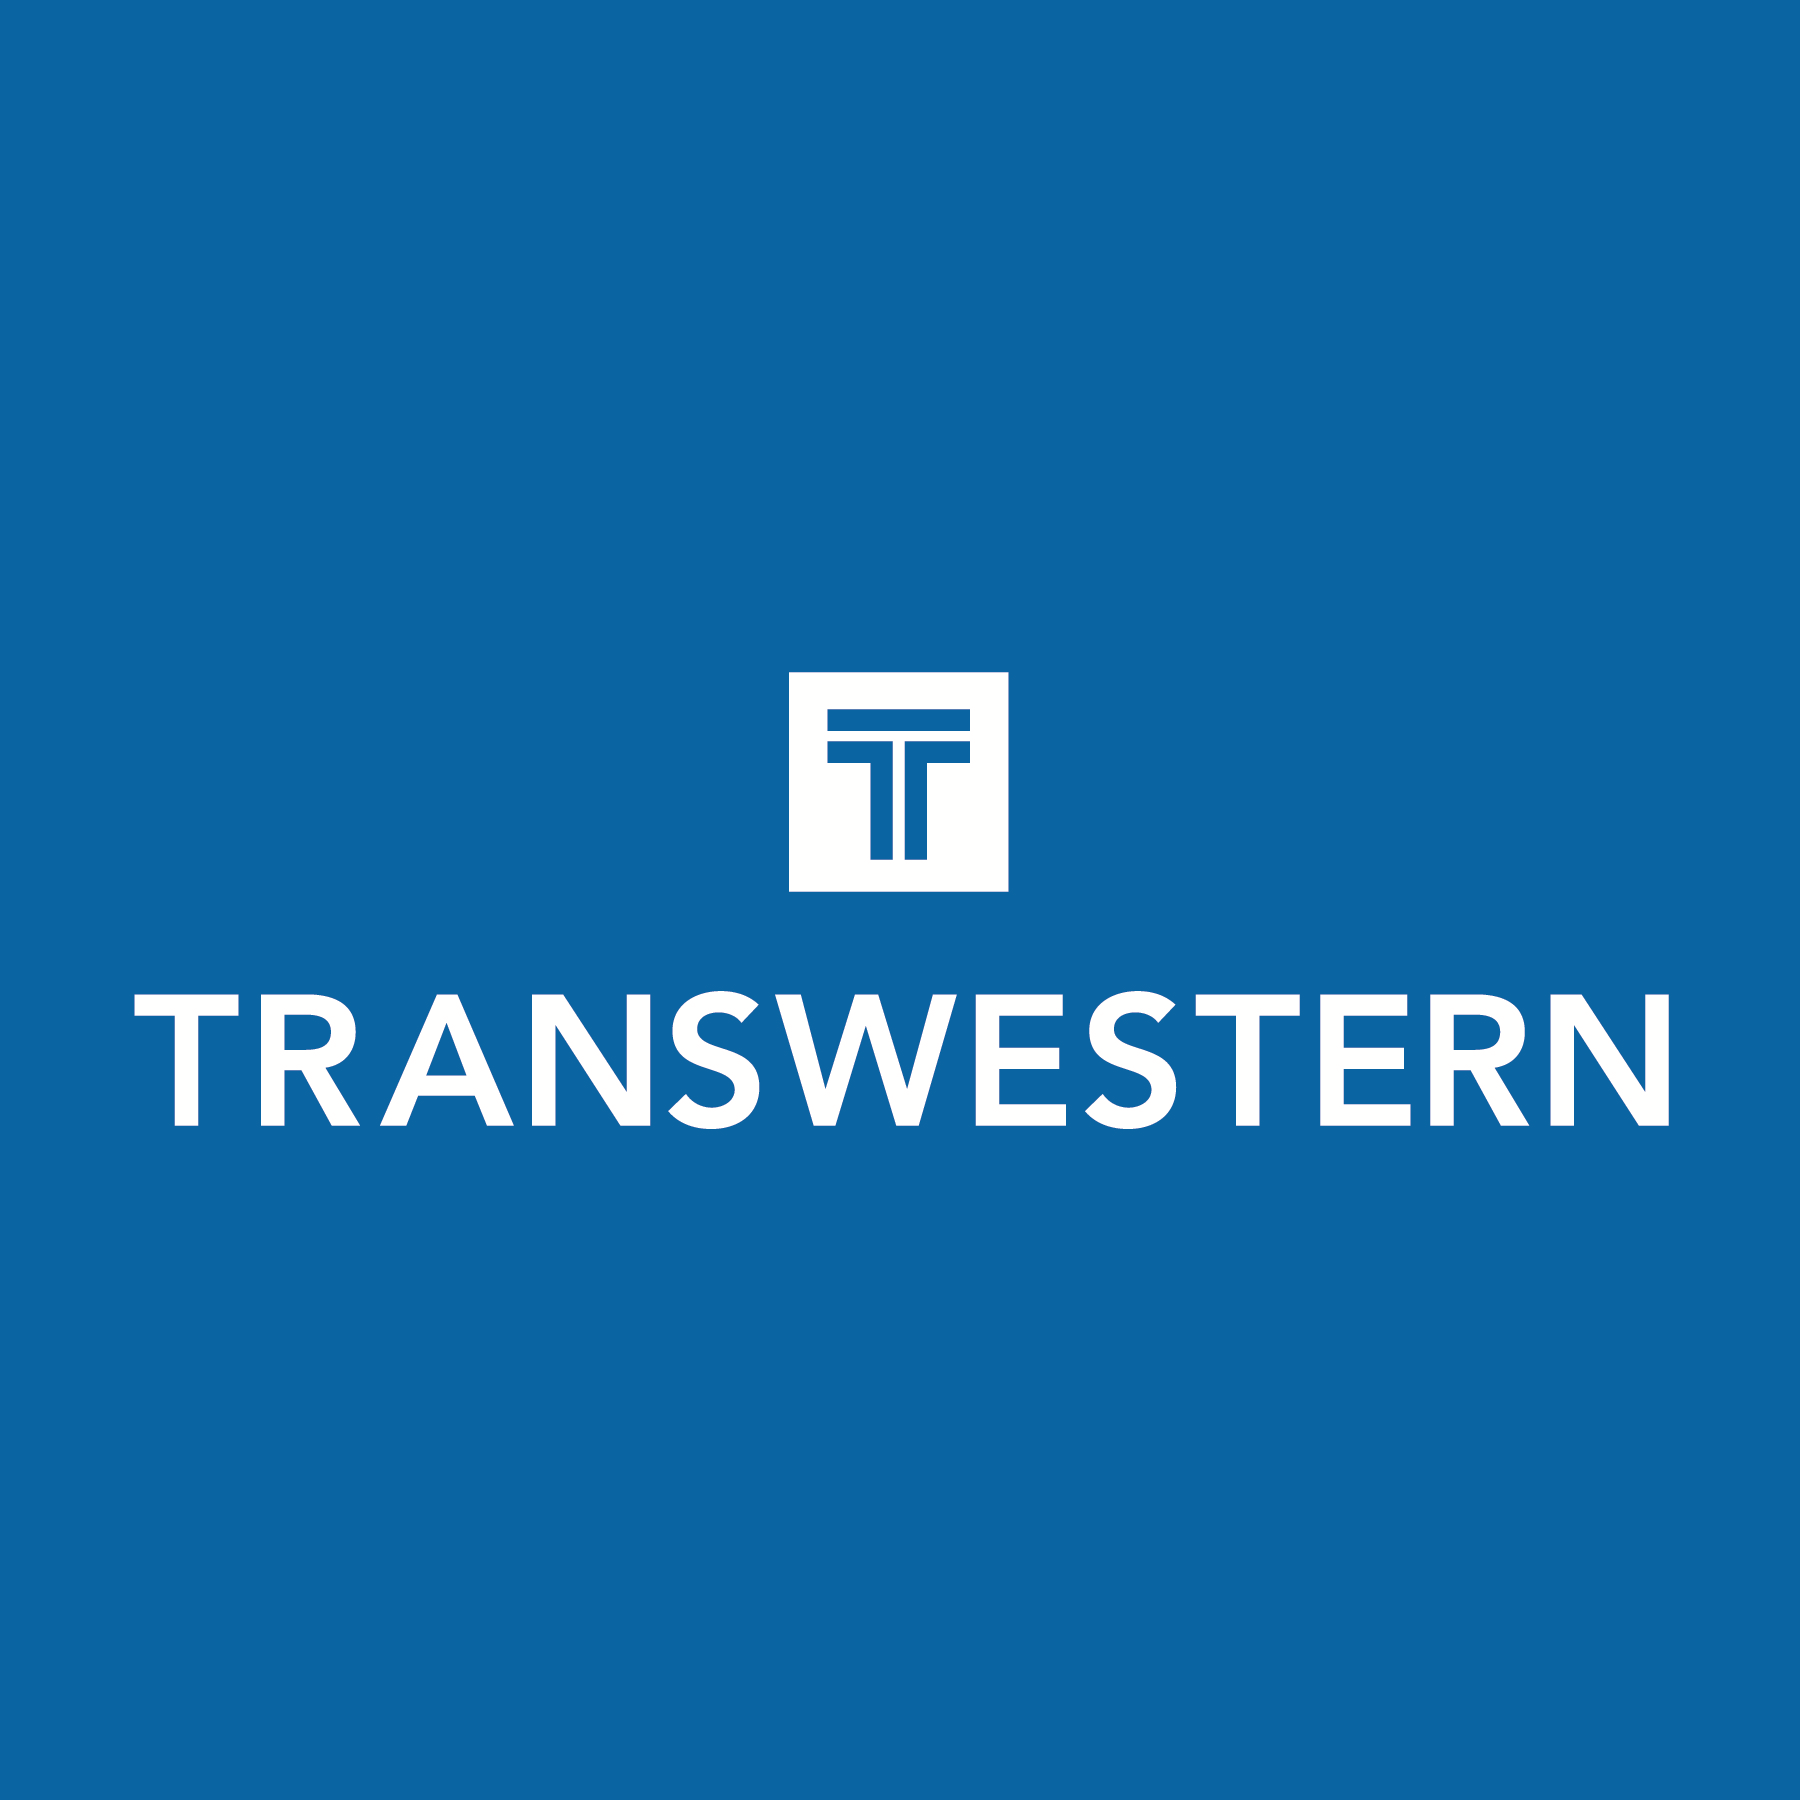 Transwestern Real Estate Services Company Logo